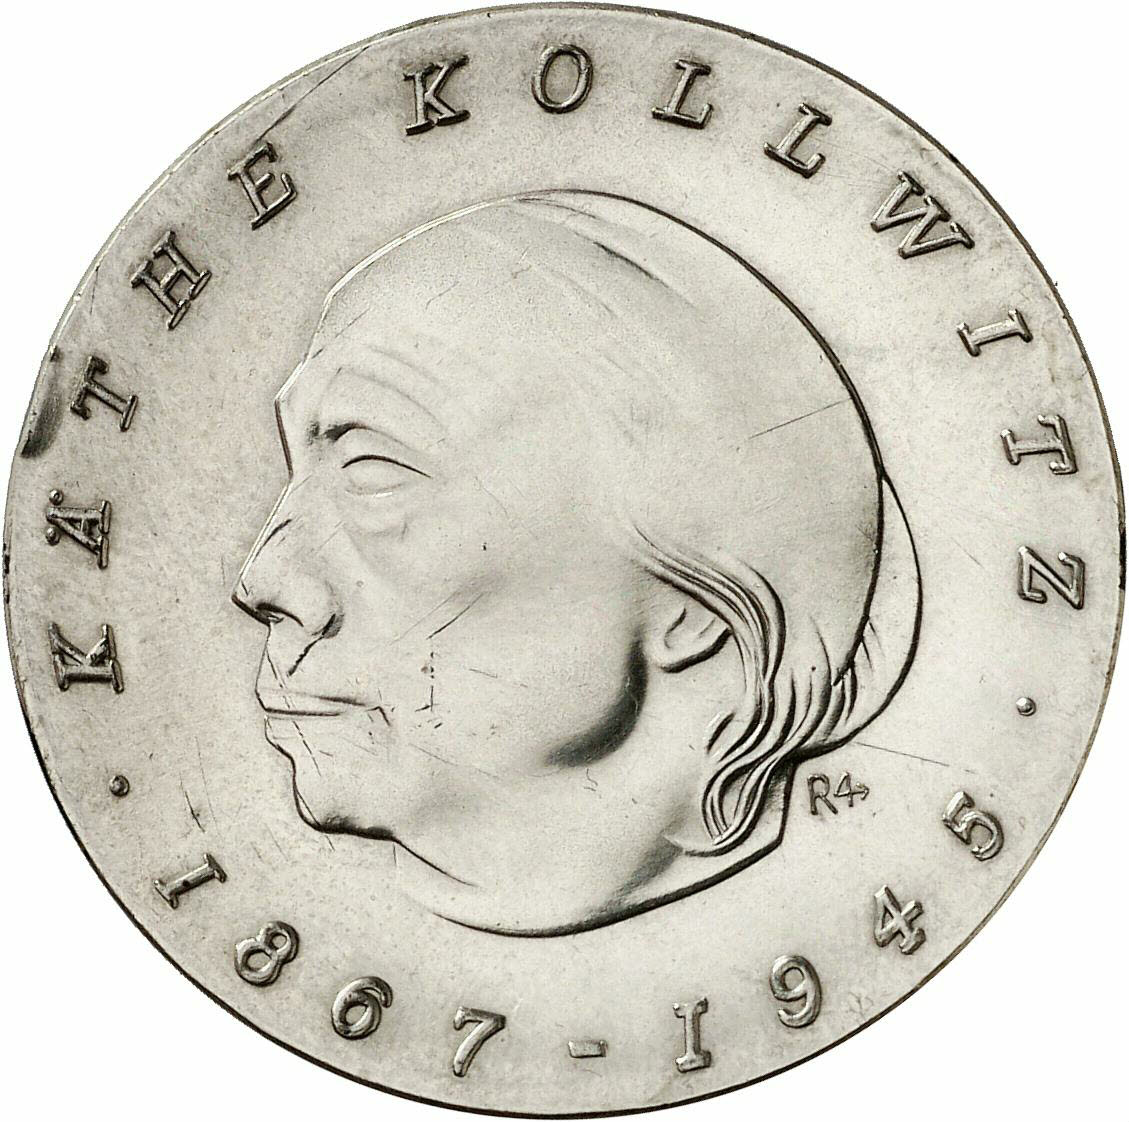 DE 10 Mark der Deutschen Notenbank 1967